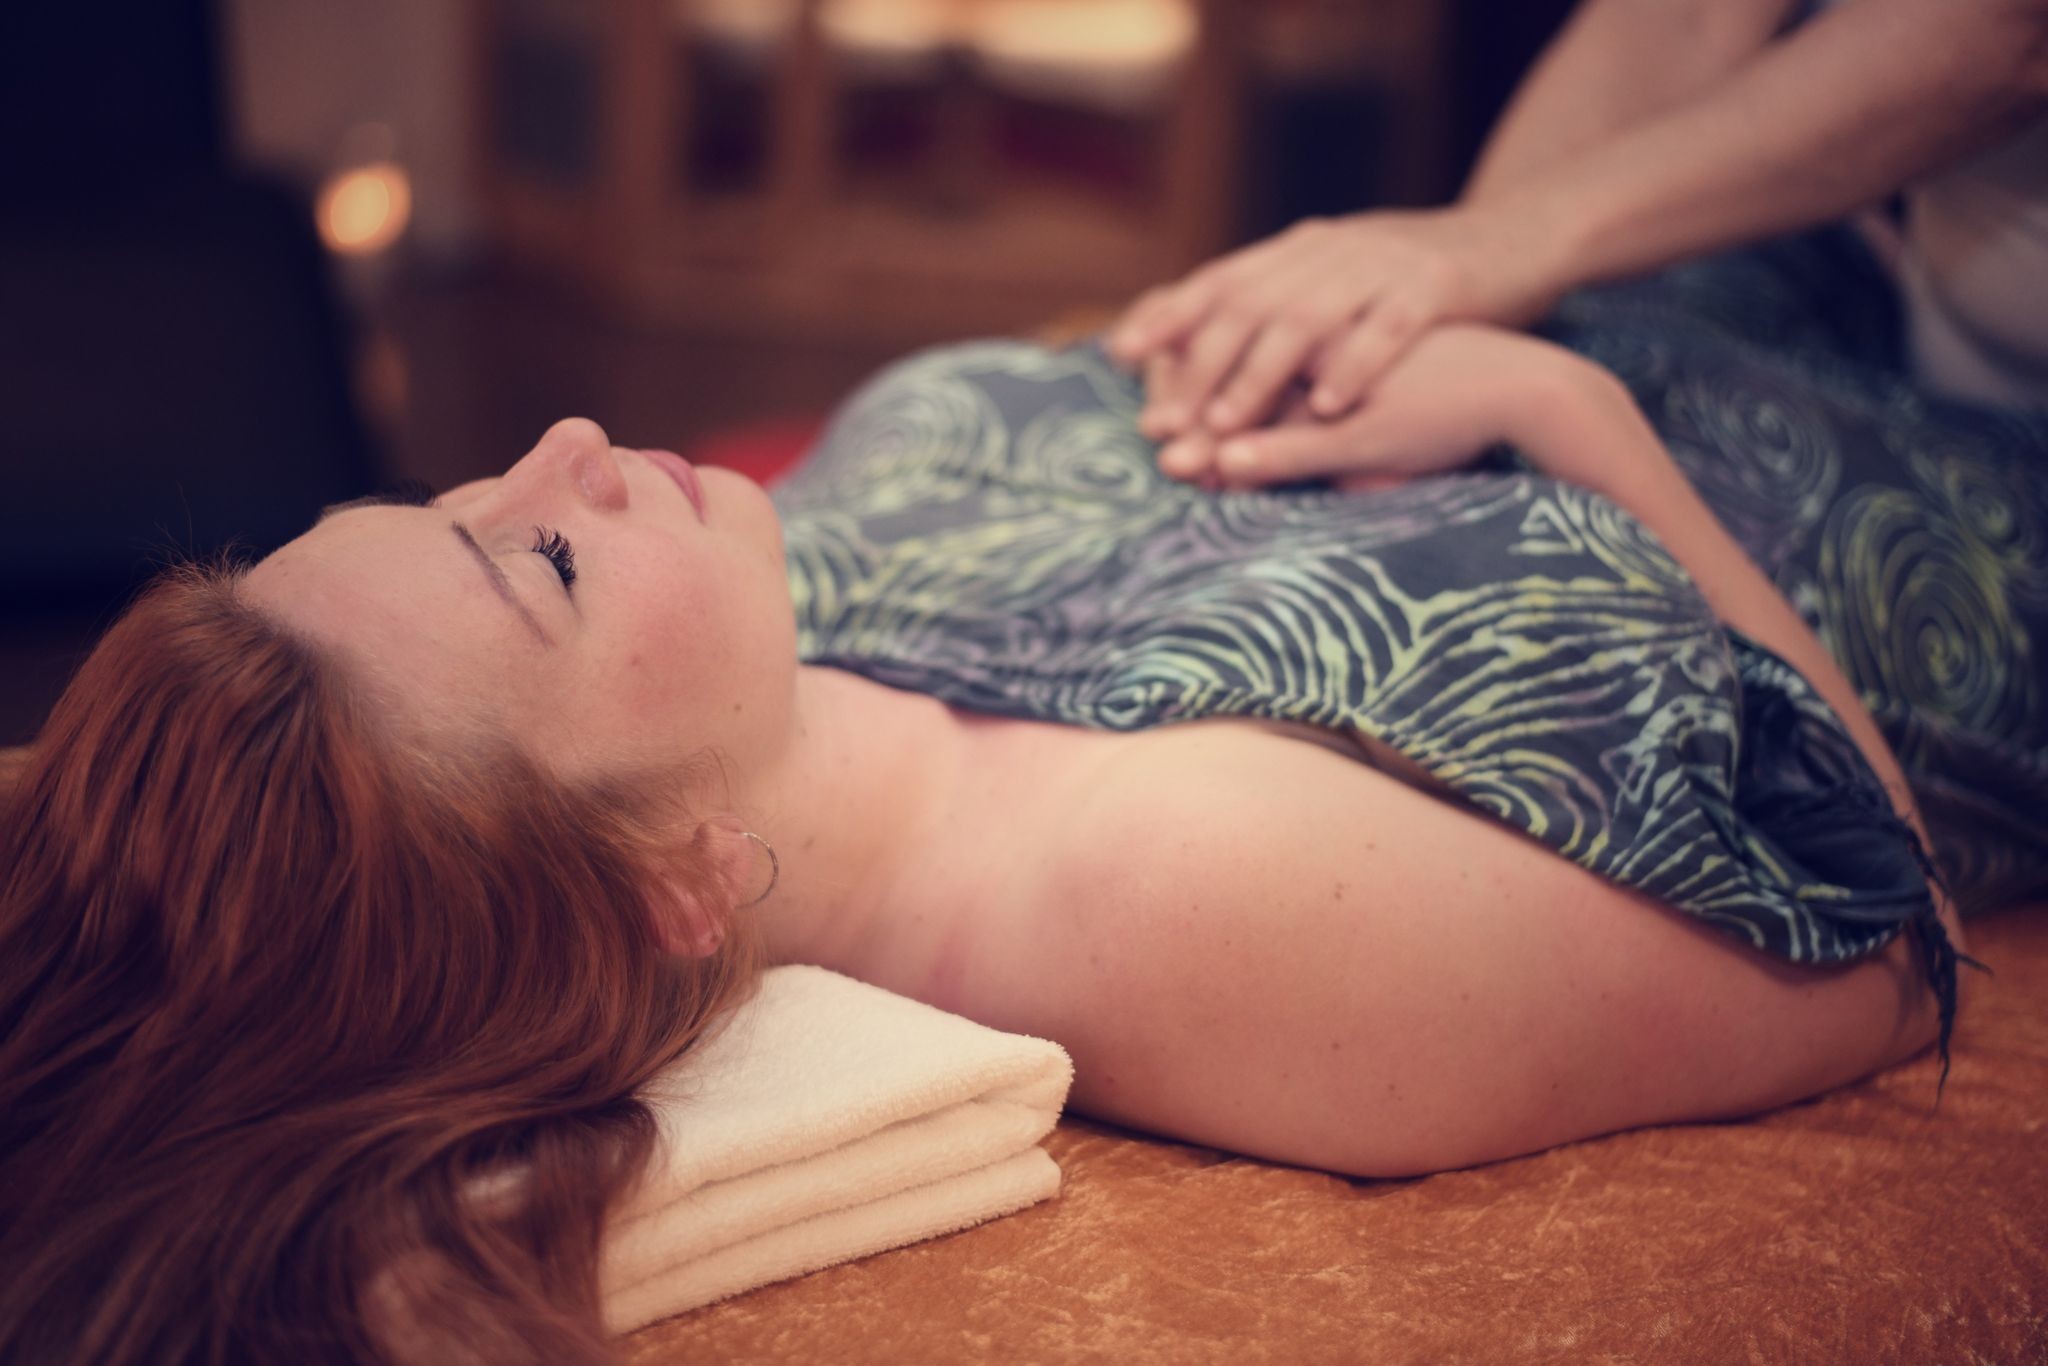 aldo franco recommends best of czech massage pic